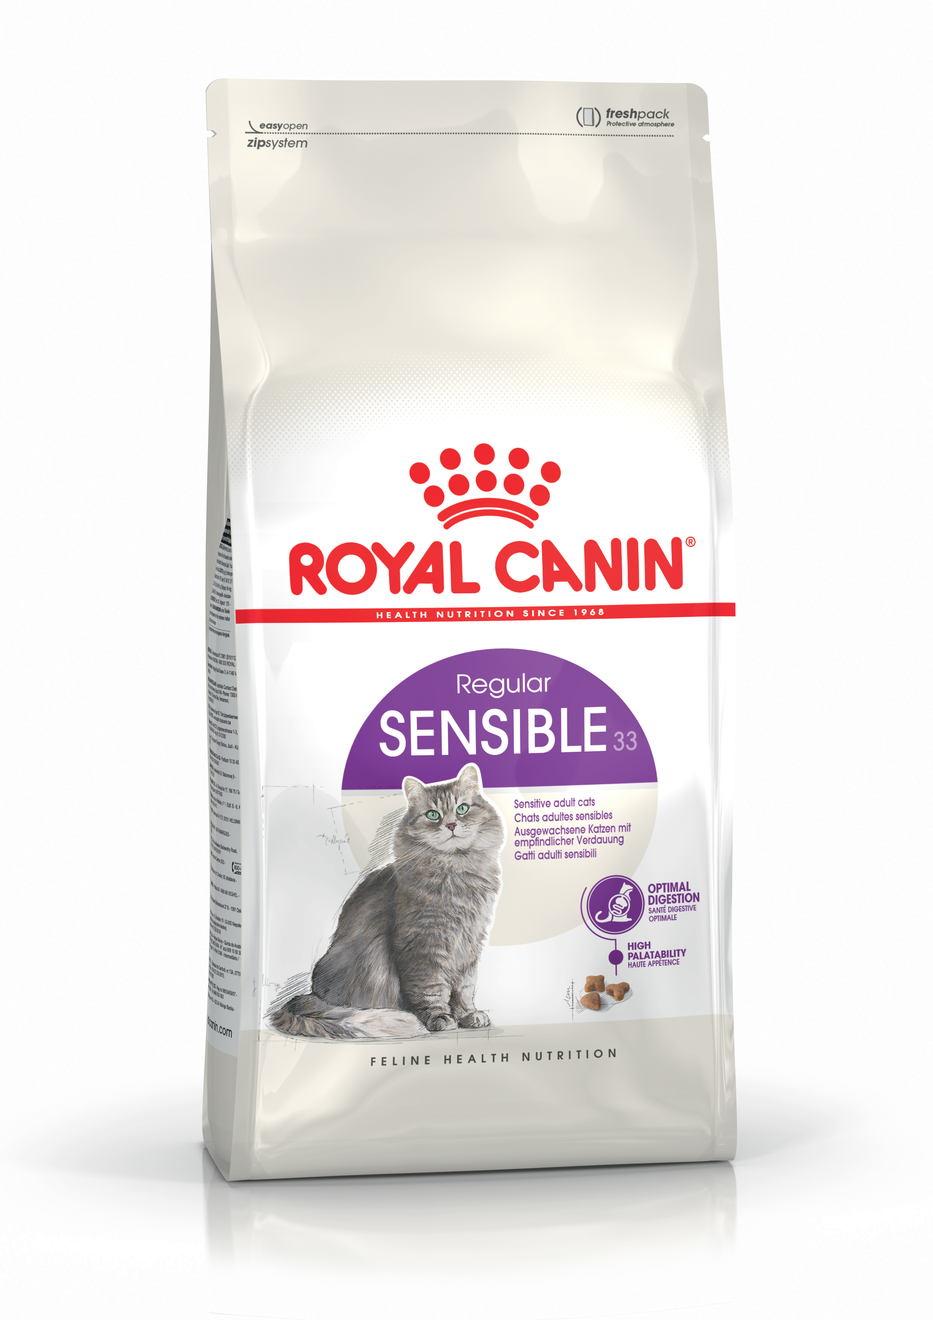 ROYAL CANIN Sensible Adult Cat Food